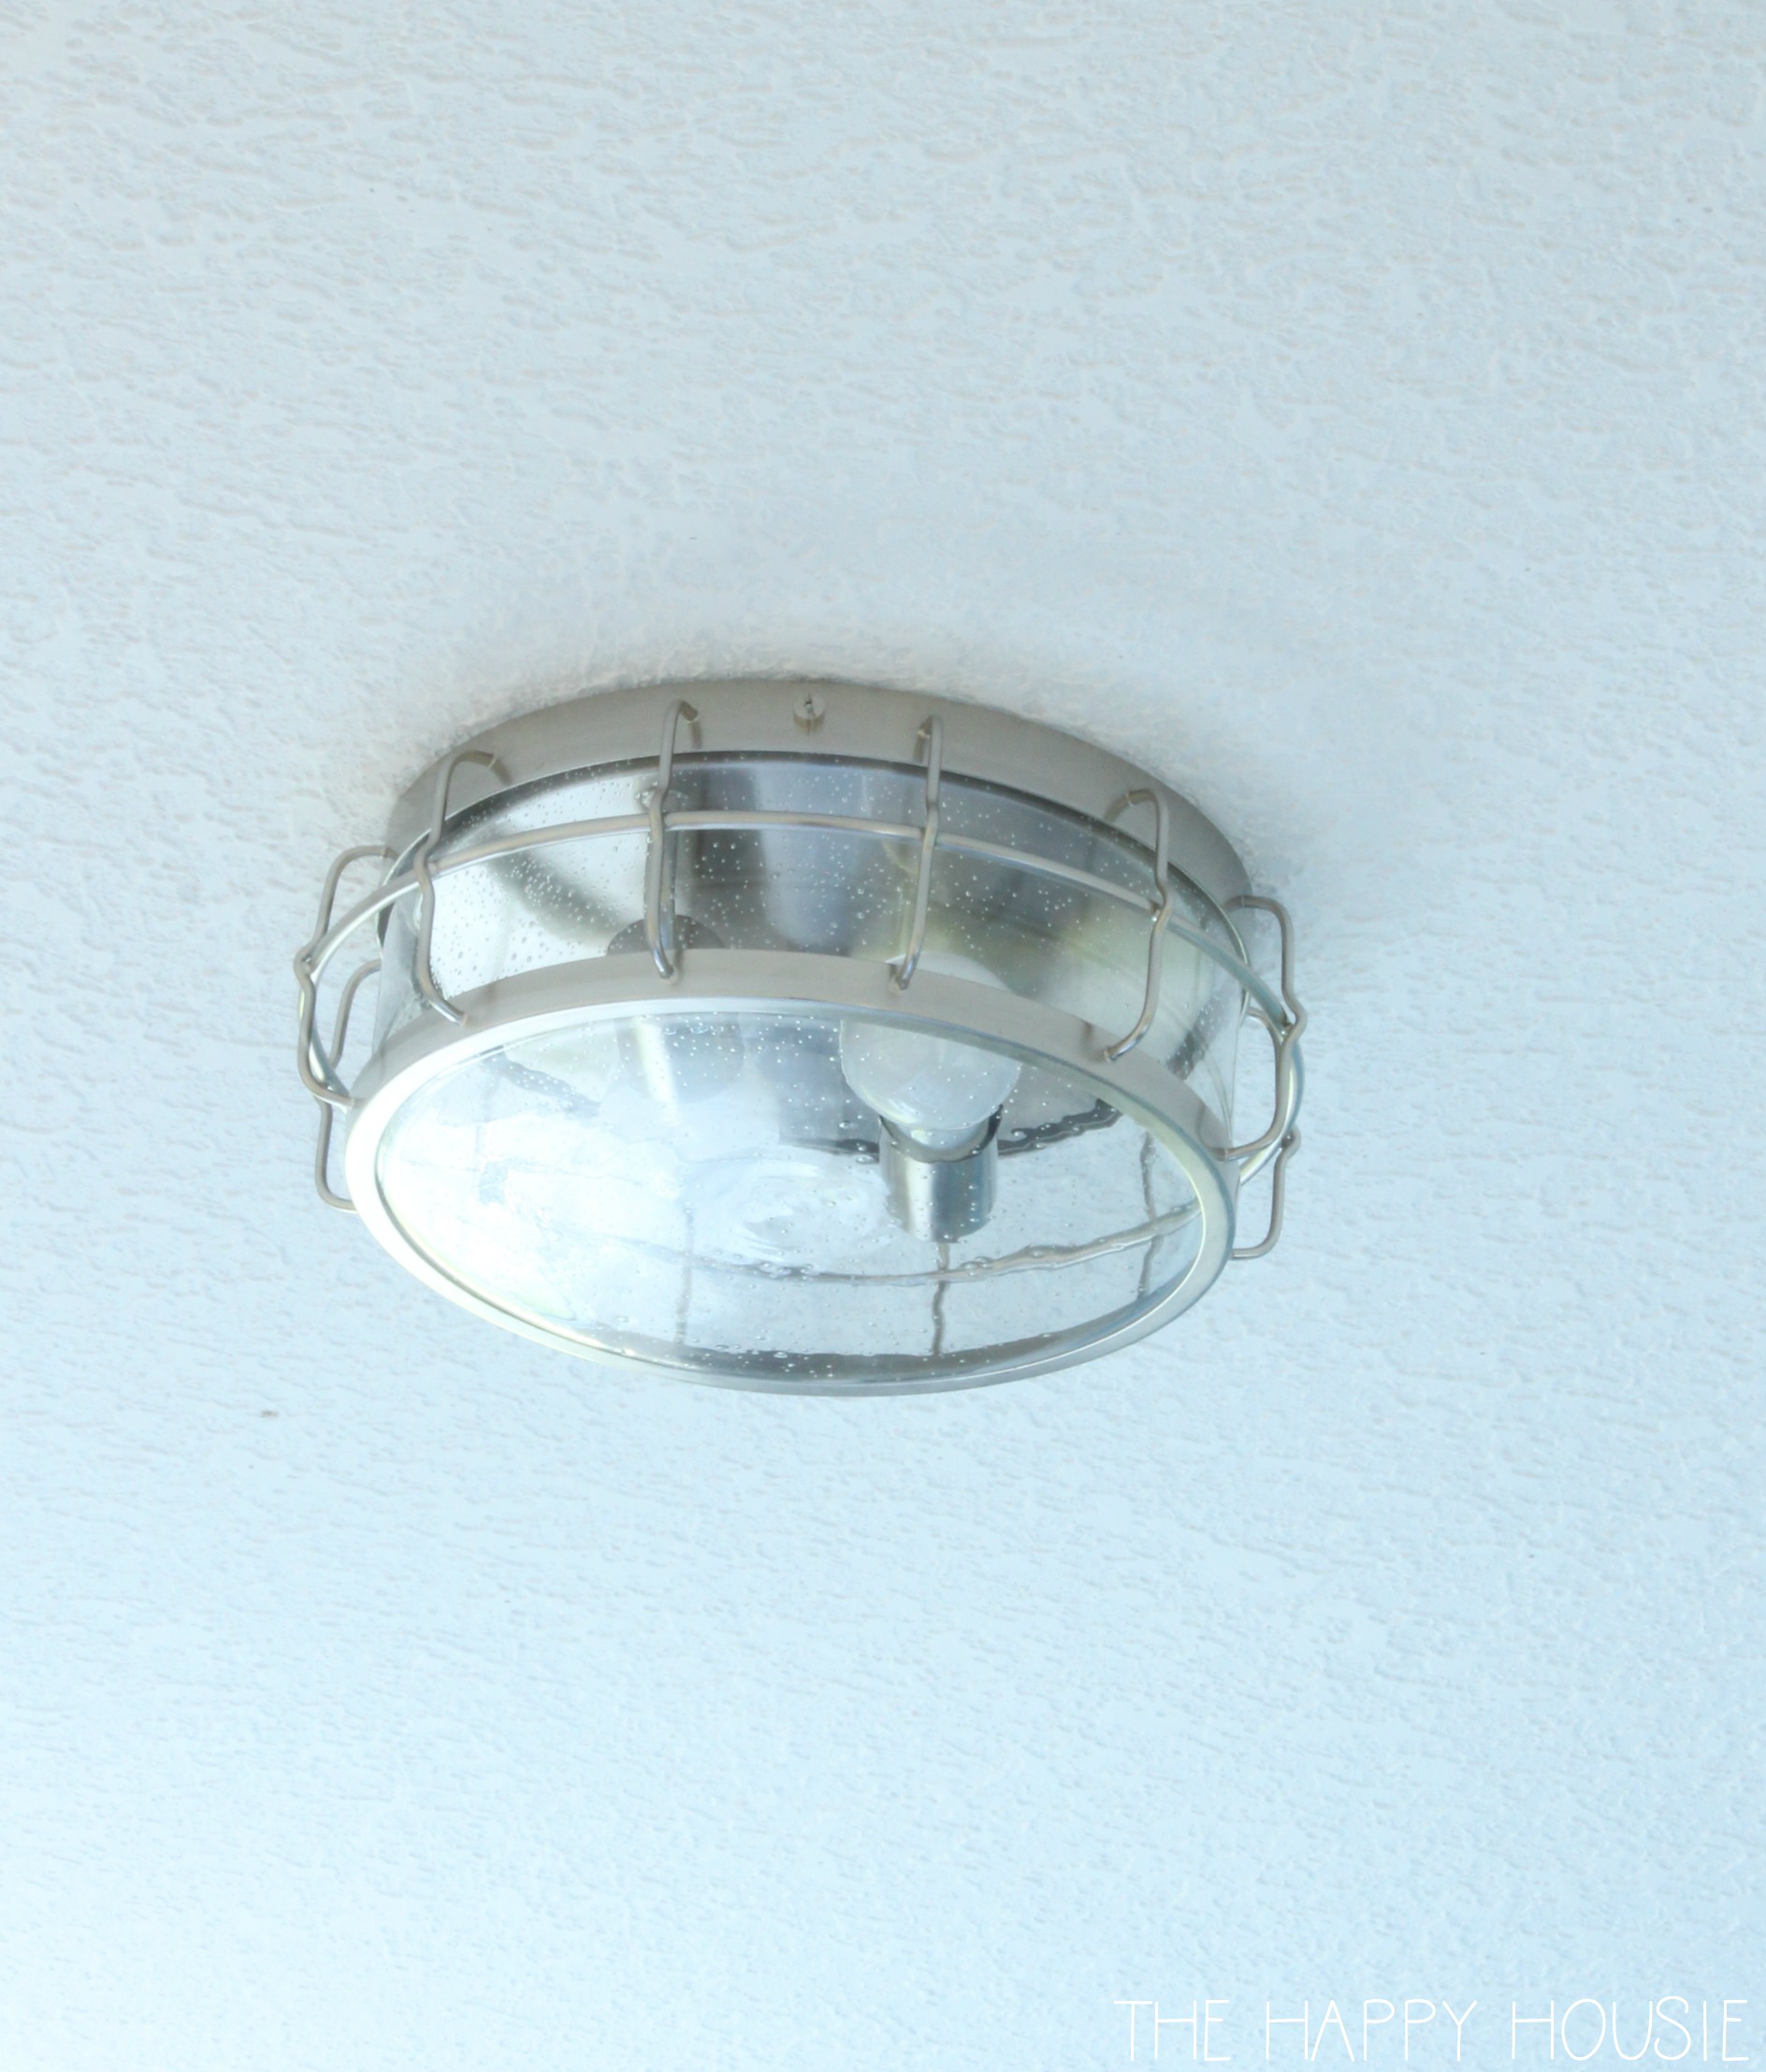 The flush mount light in the ceiling.